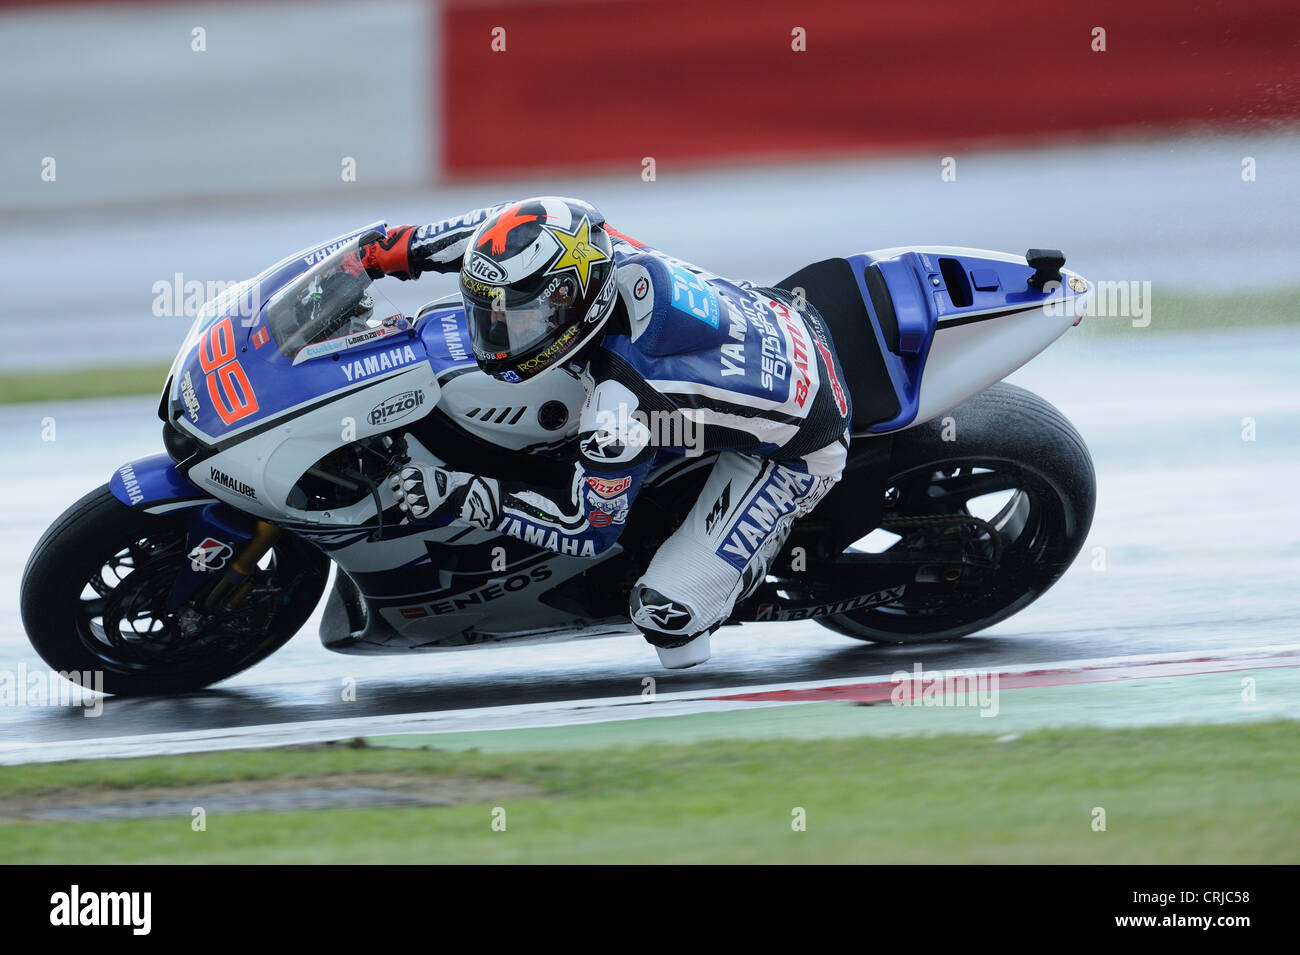 jorge lorenzo, yamaha, moto gp 2012 Stock Photo